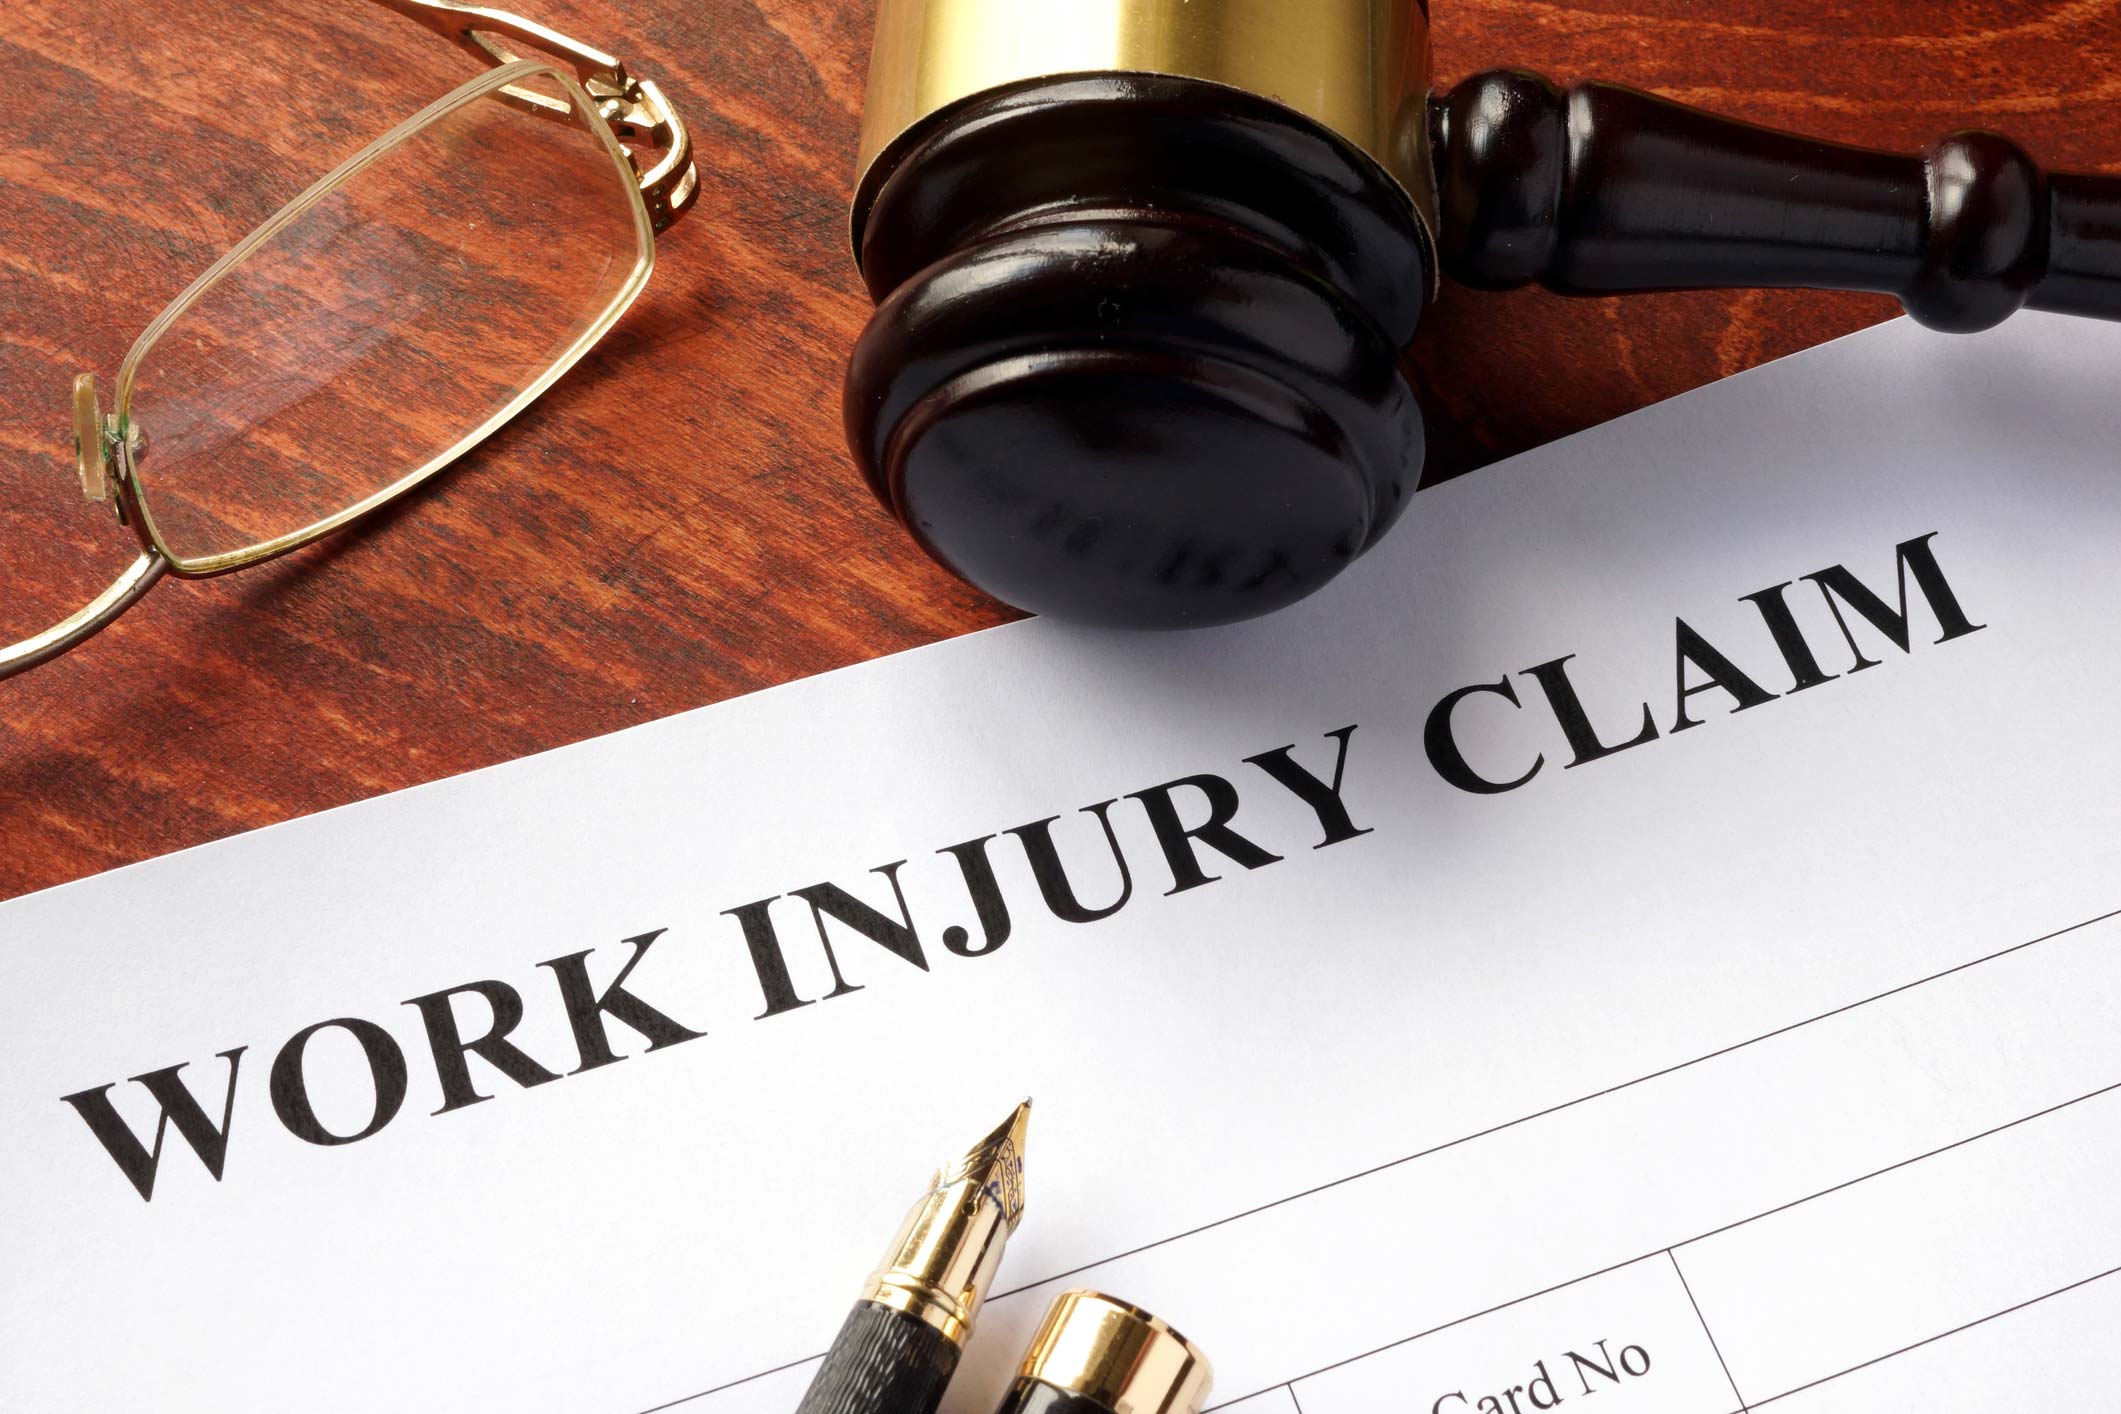 Work Injury Claim